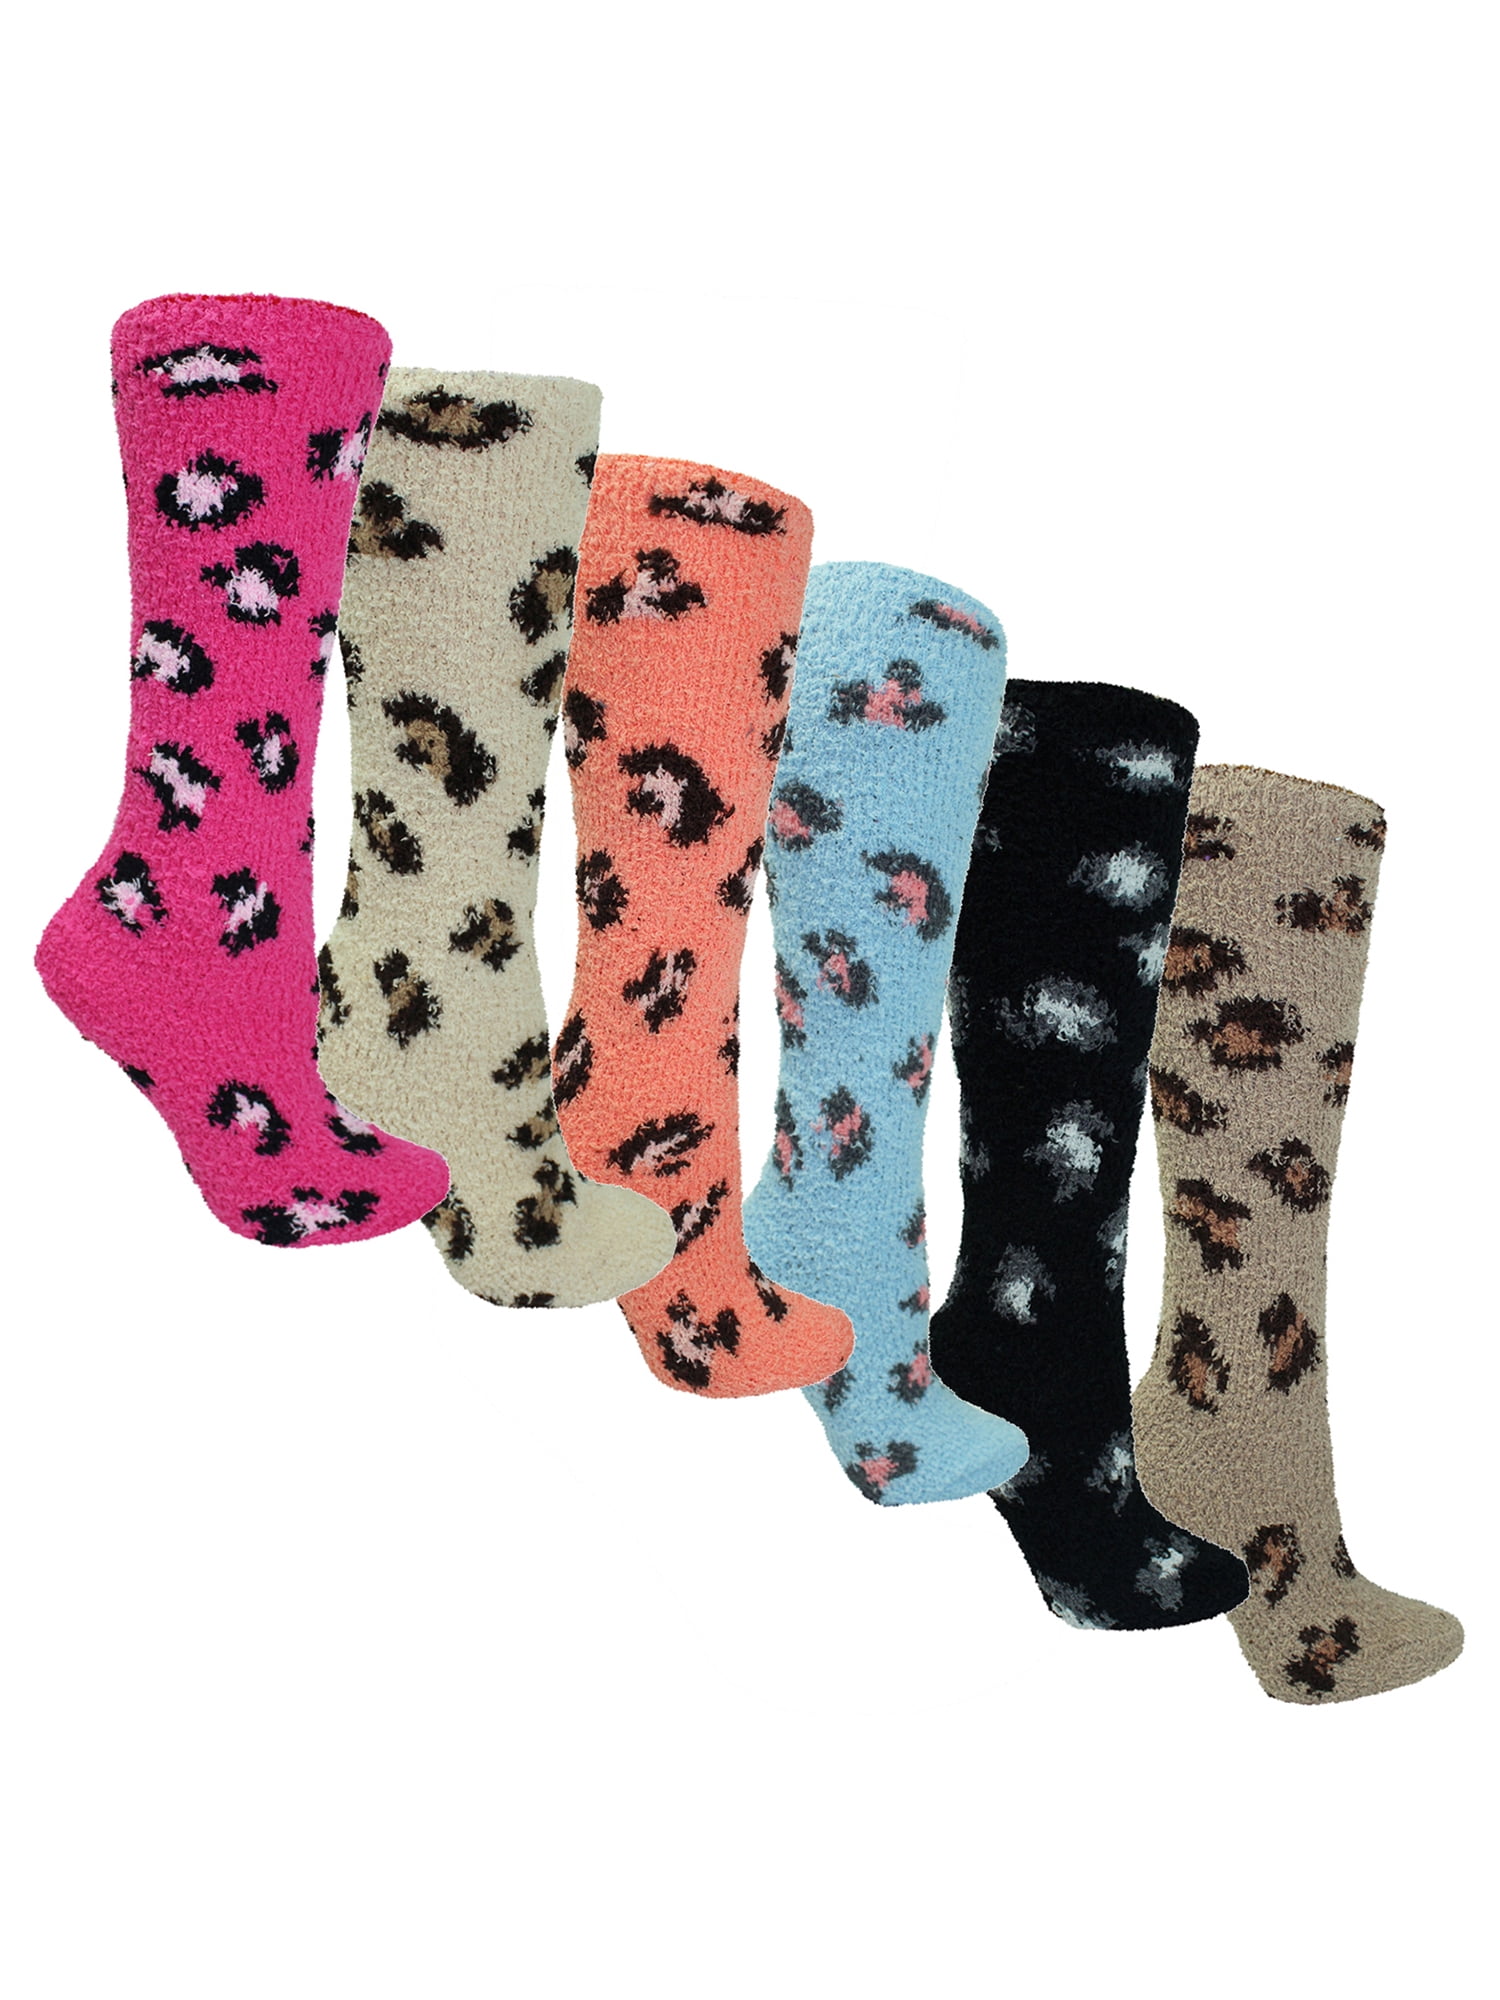 FEDULK Women Leopard Print Funny Sock Comfort Casual Fancy Novelty Soft Short Socks